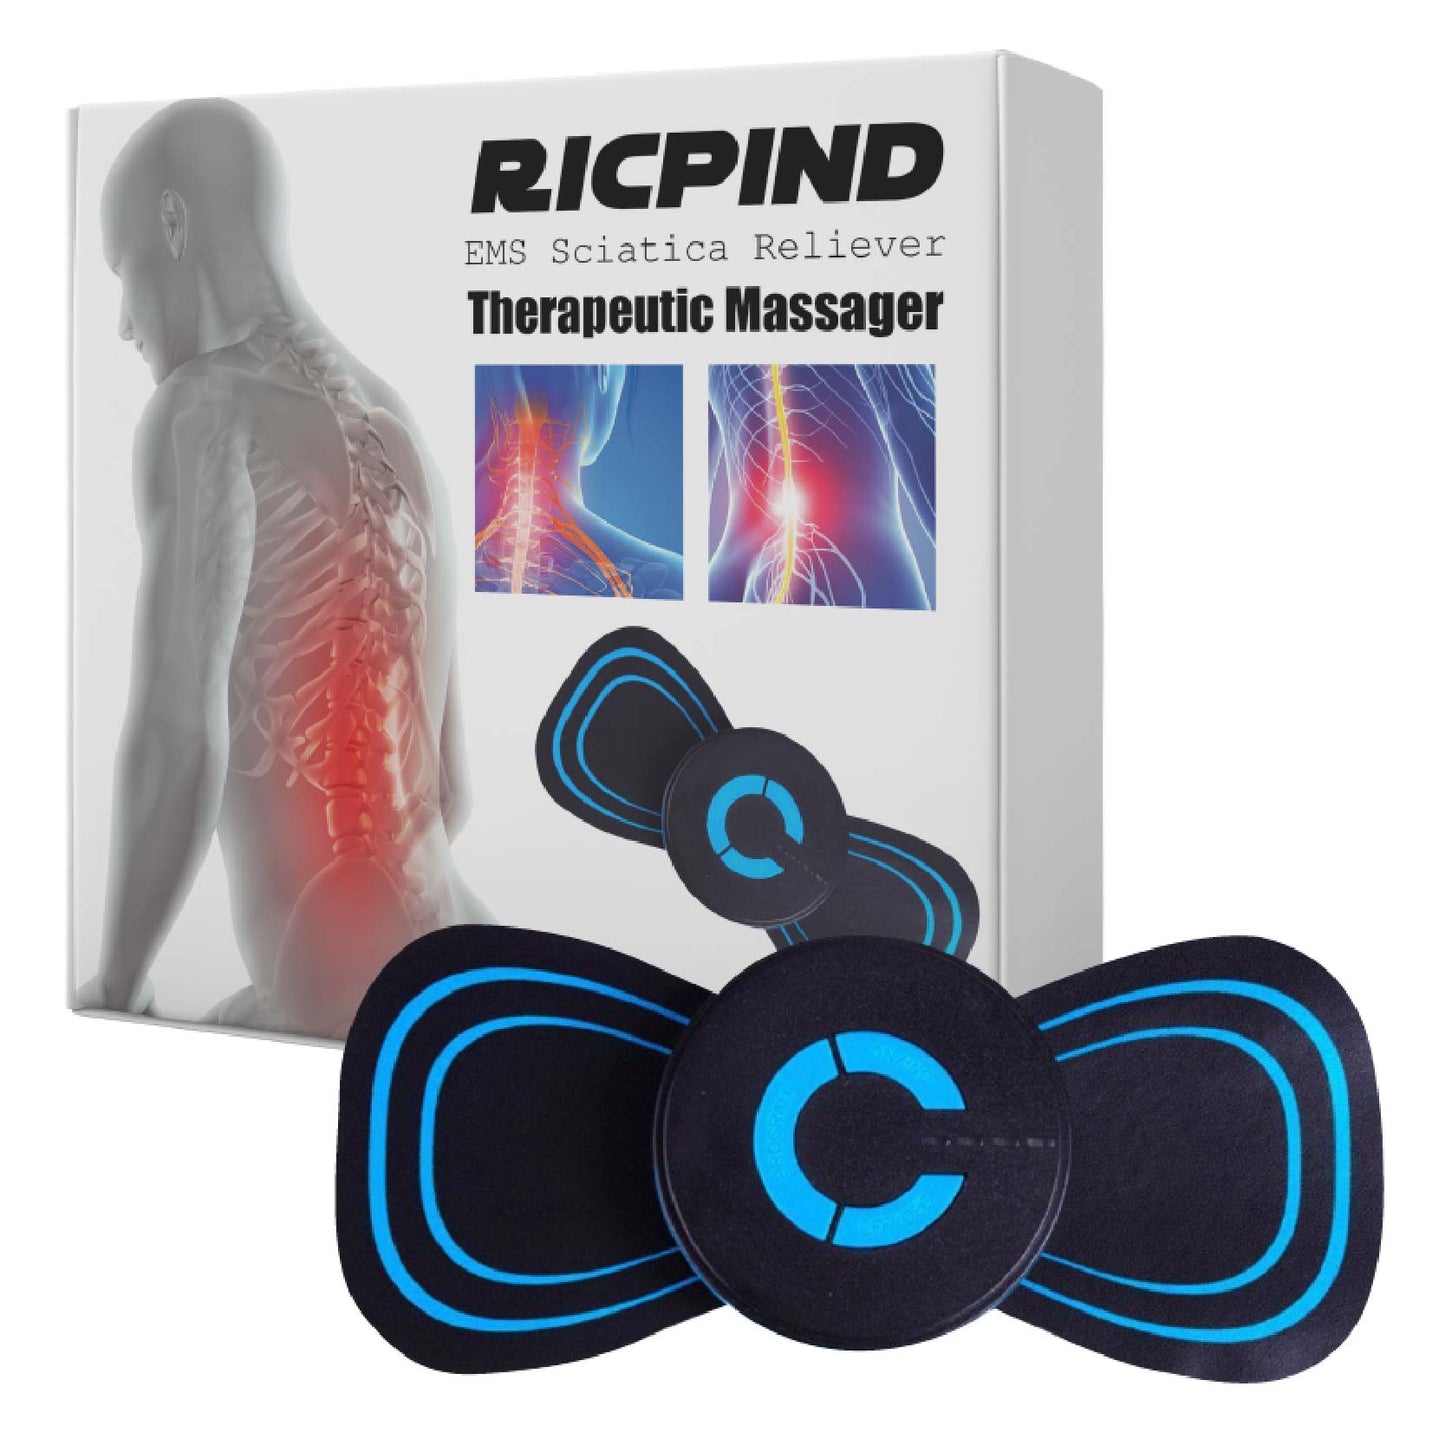 Ricpind EMS SciaticaReliever Therapeutic Massager